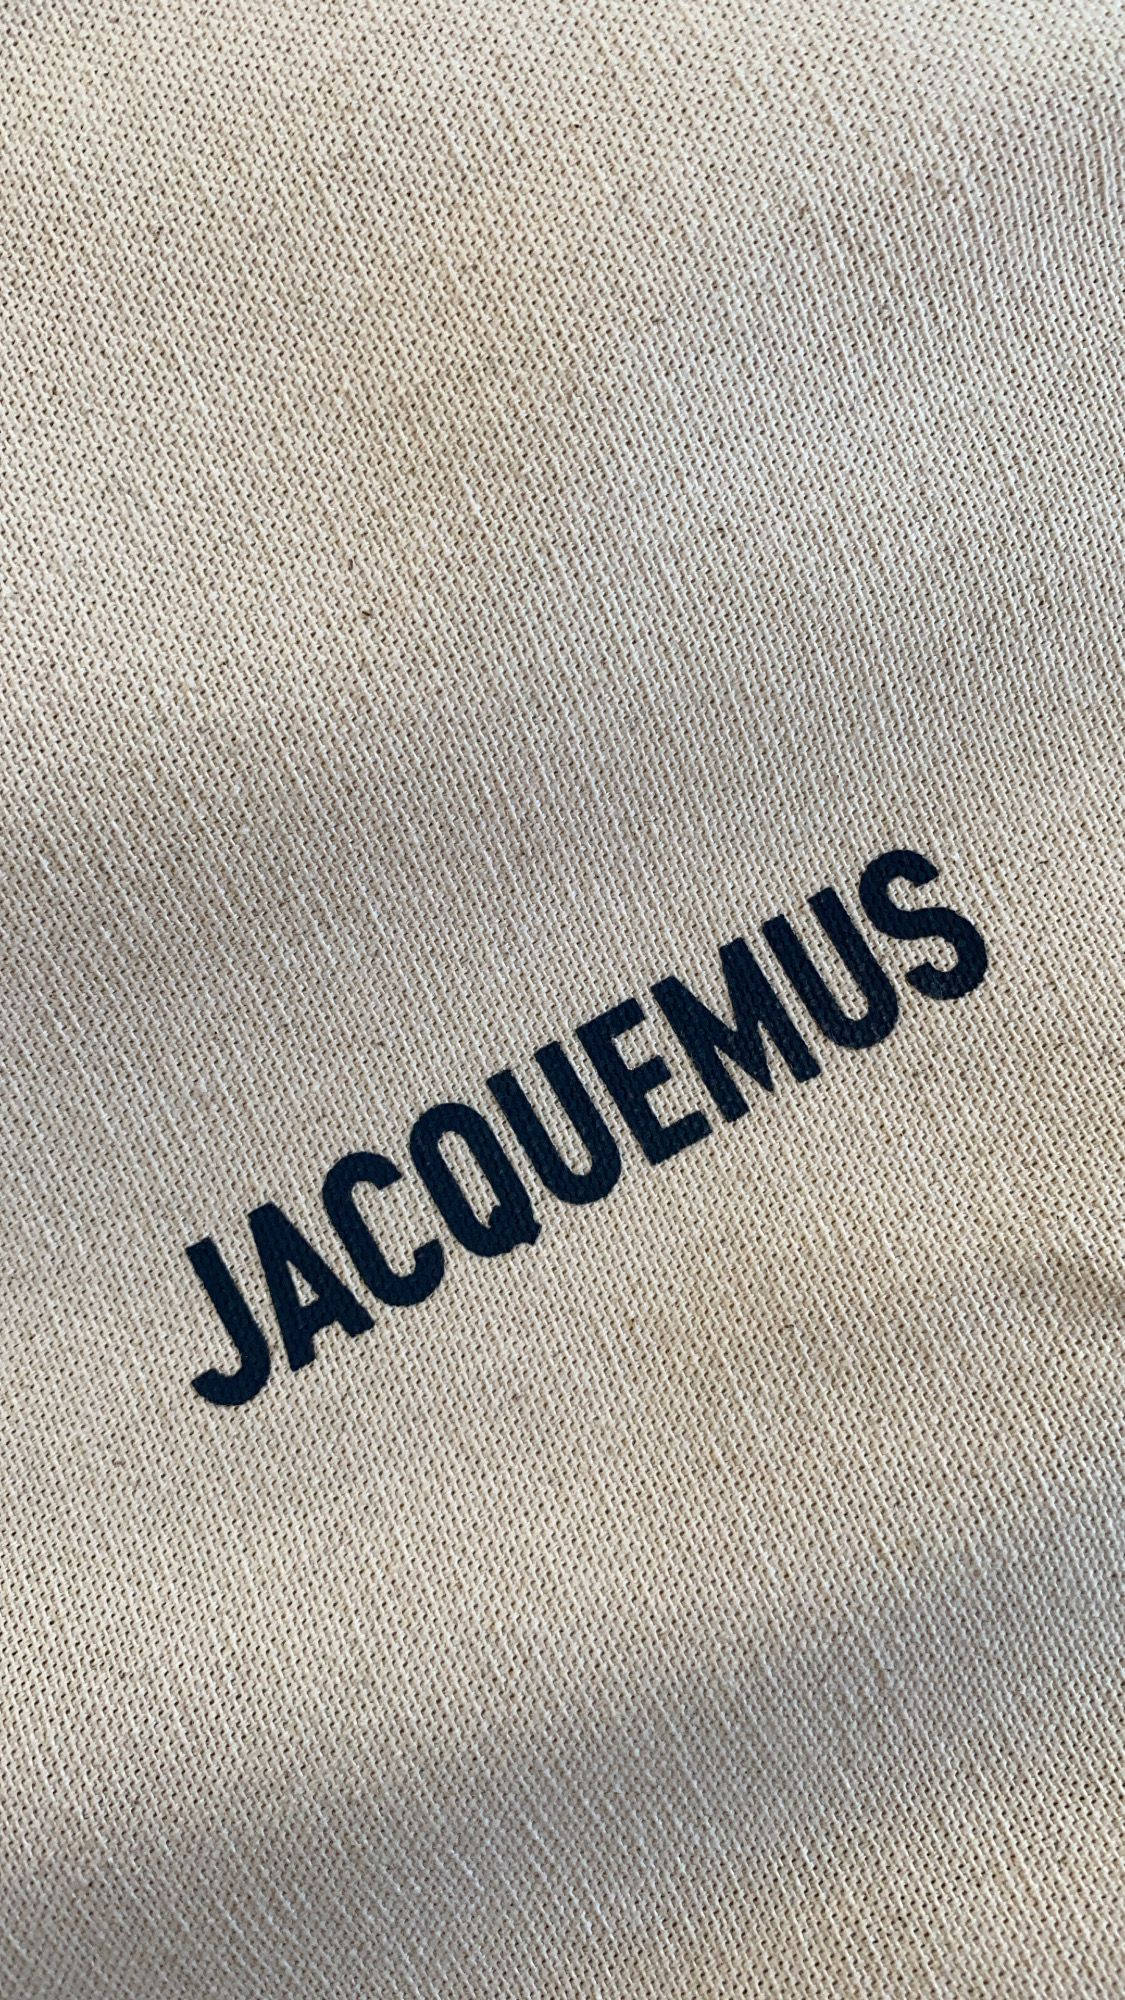 Download Simple Jacquemus Logo Wallpaper | Wallpapers.com